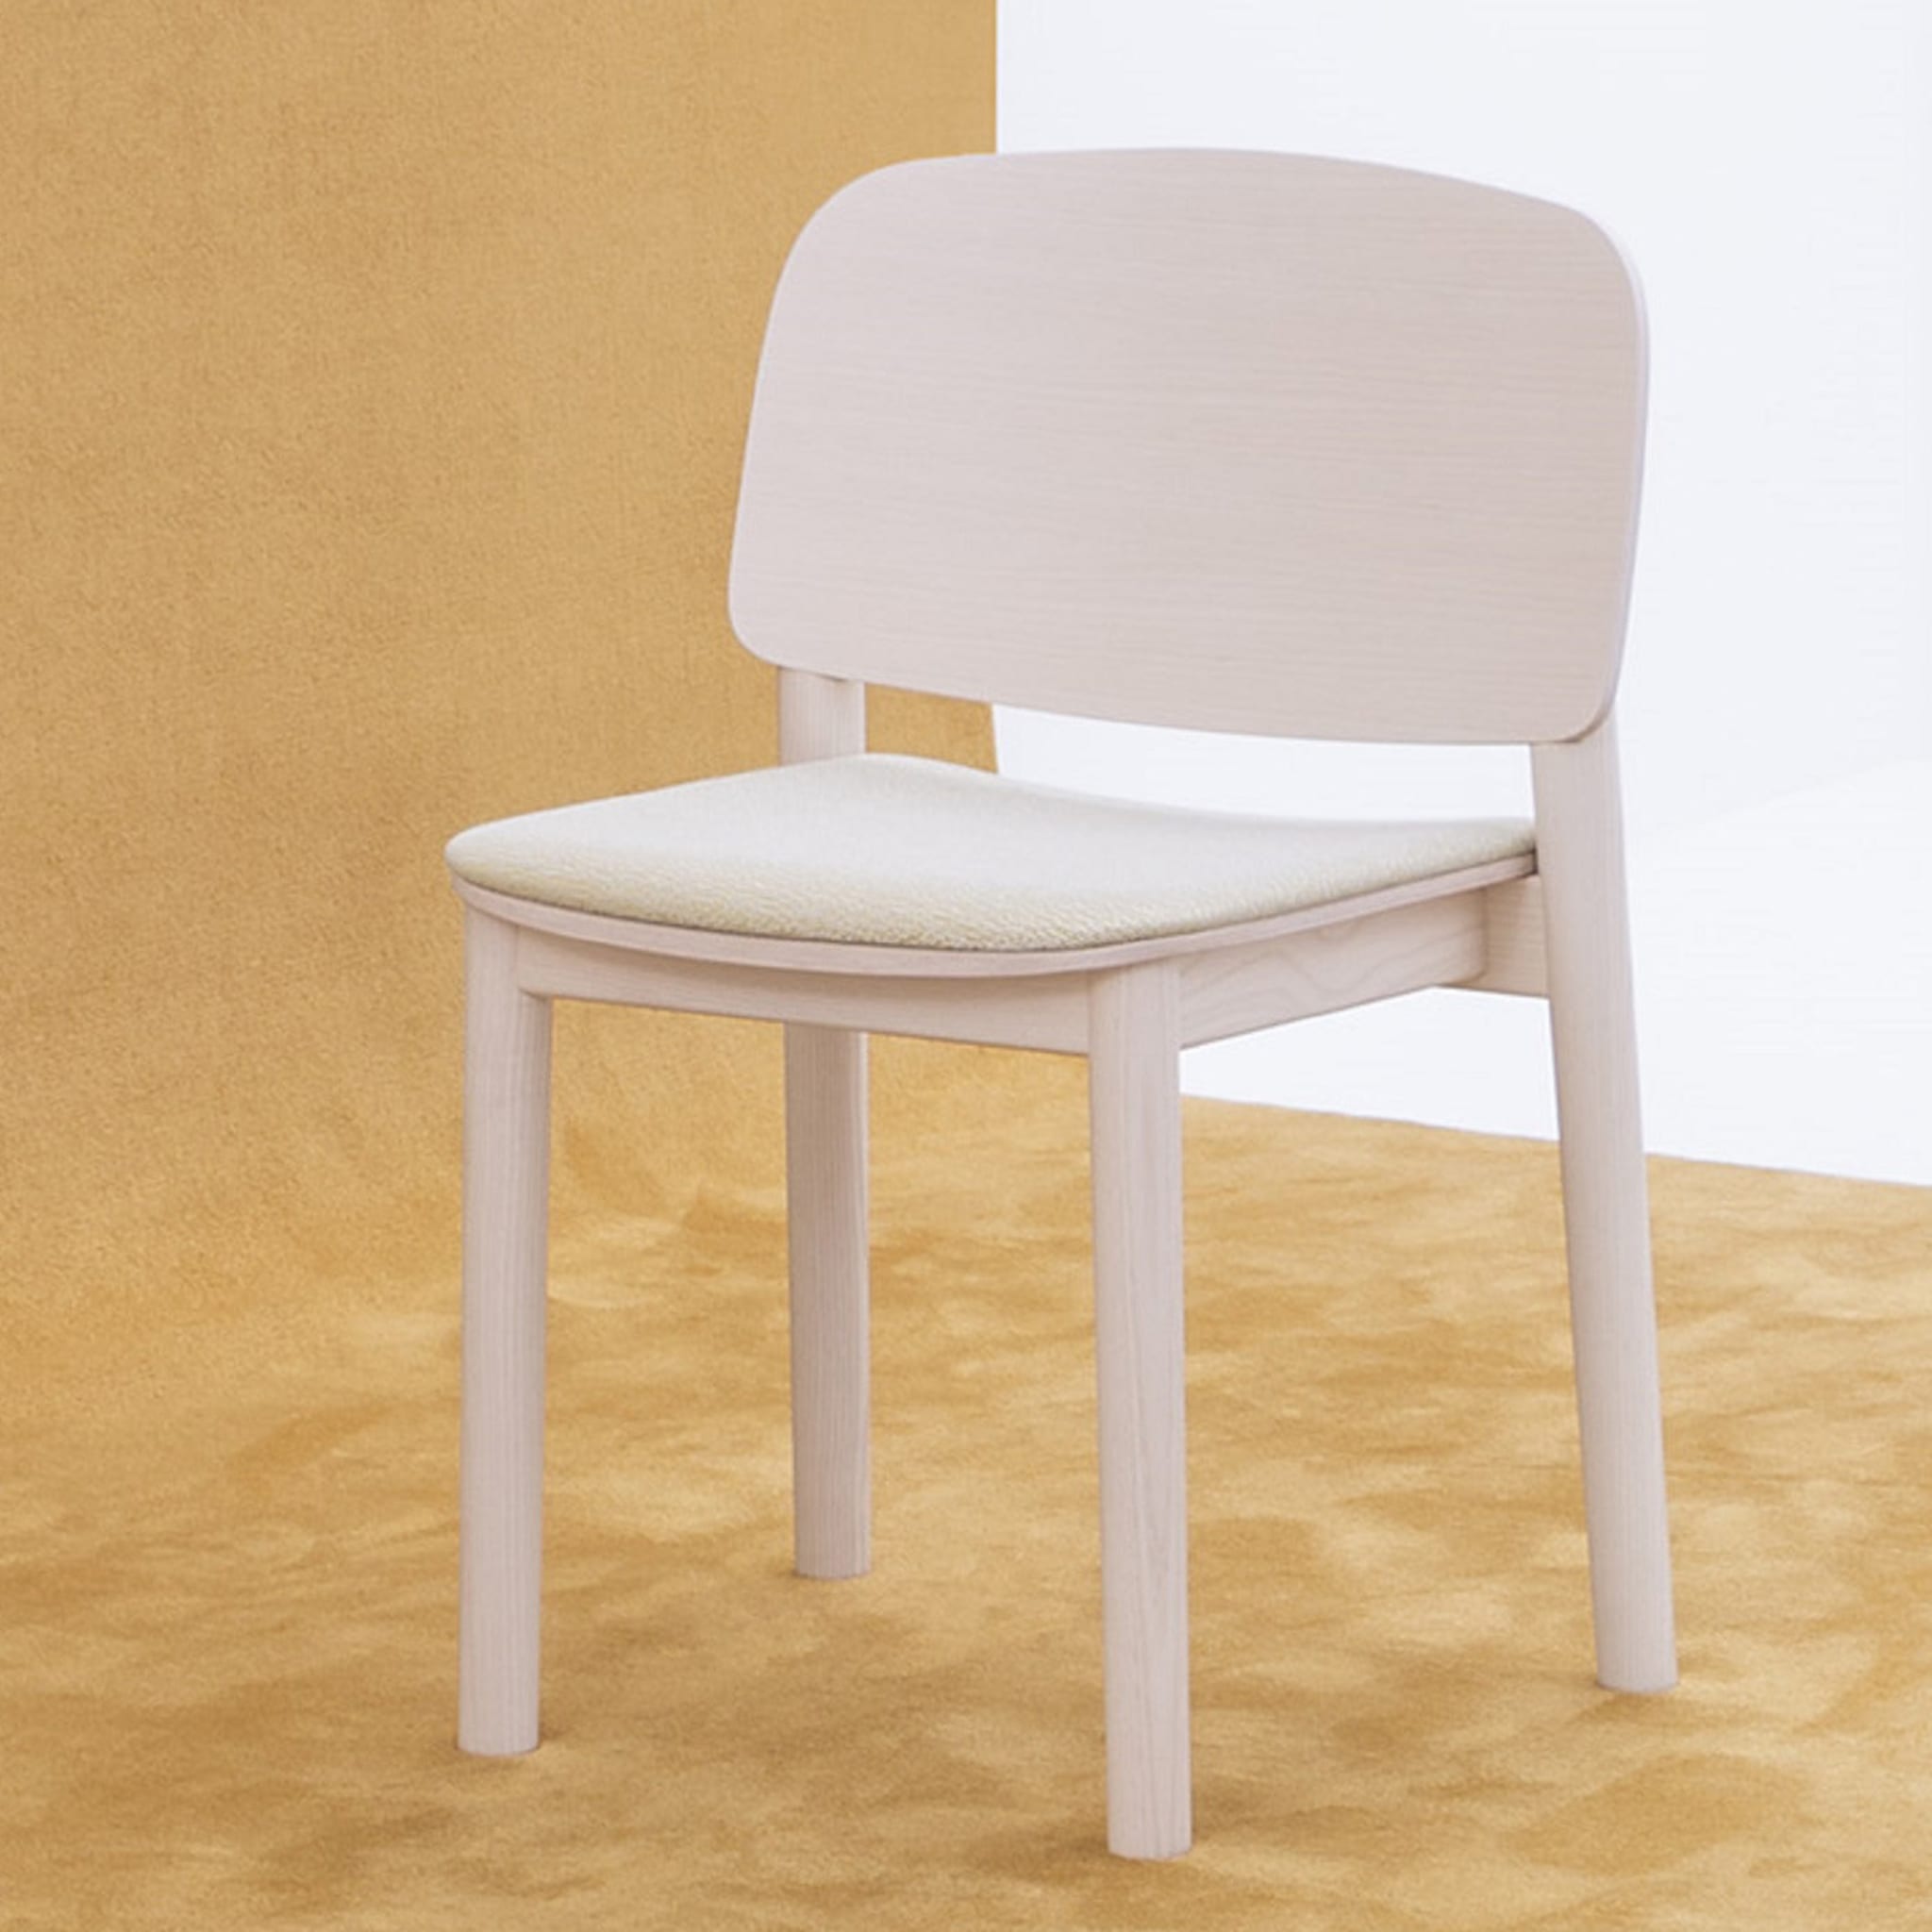 White Chair by Harri Koskinen - Alternative view 2